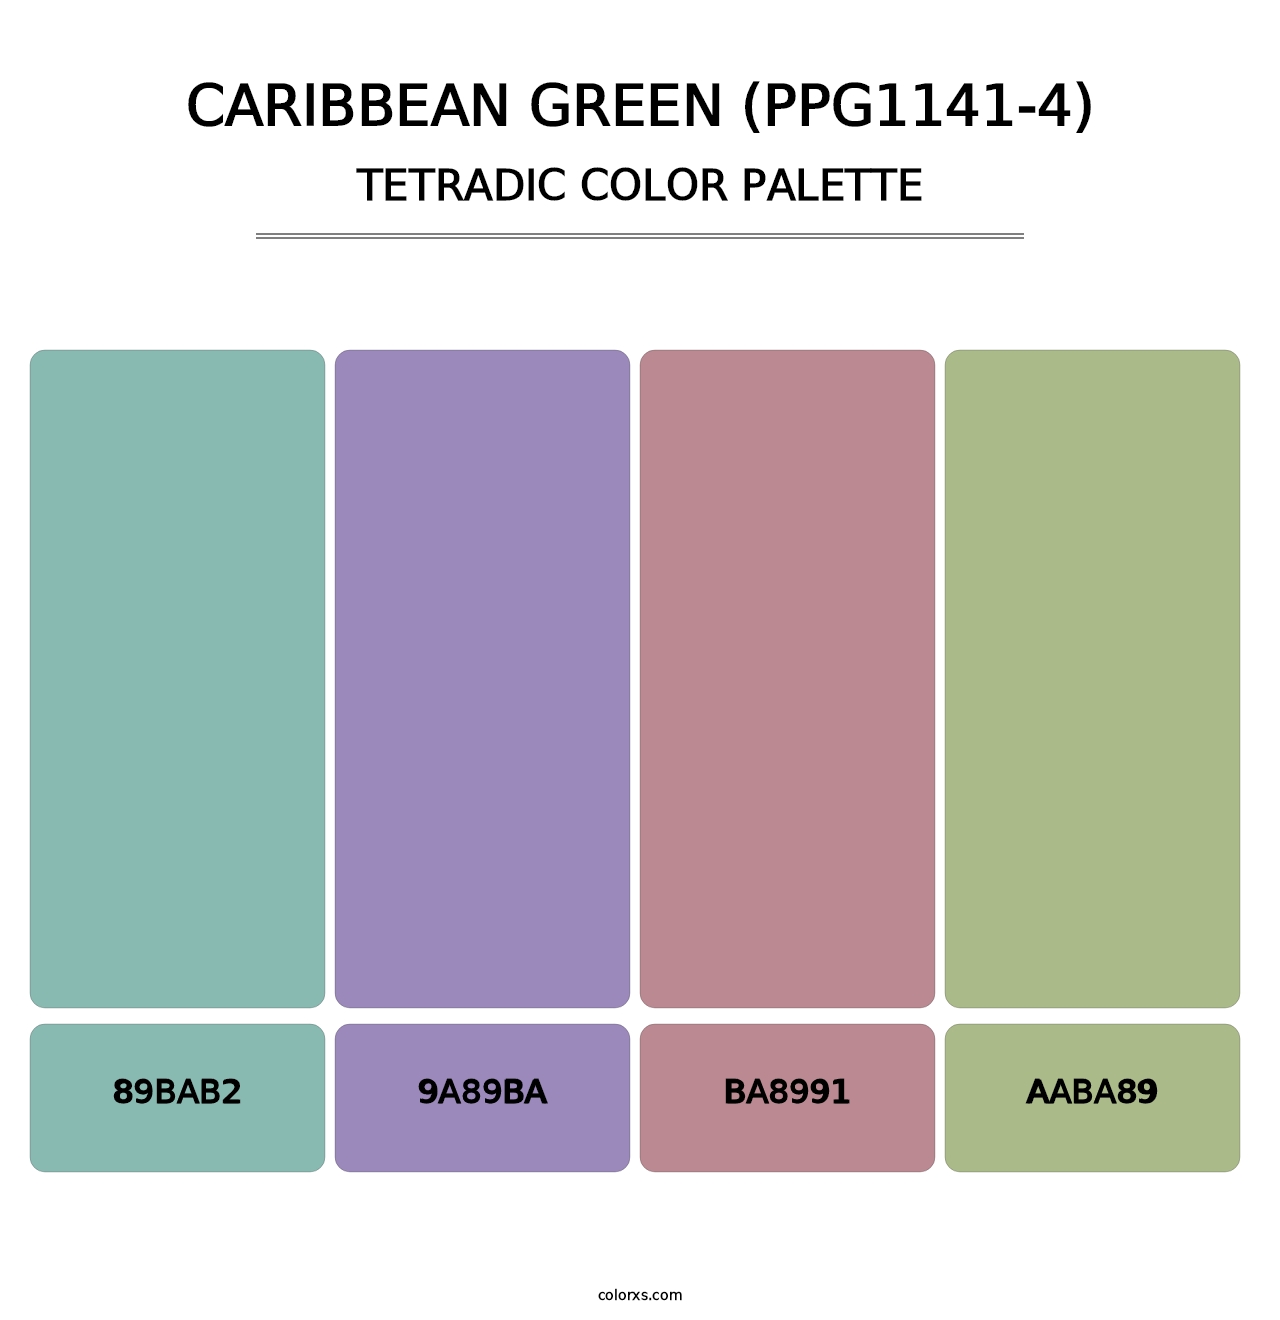 Caribbean Green (PPG1141-4) - Tetradic Color Palette